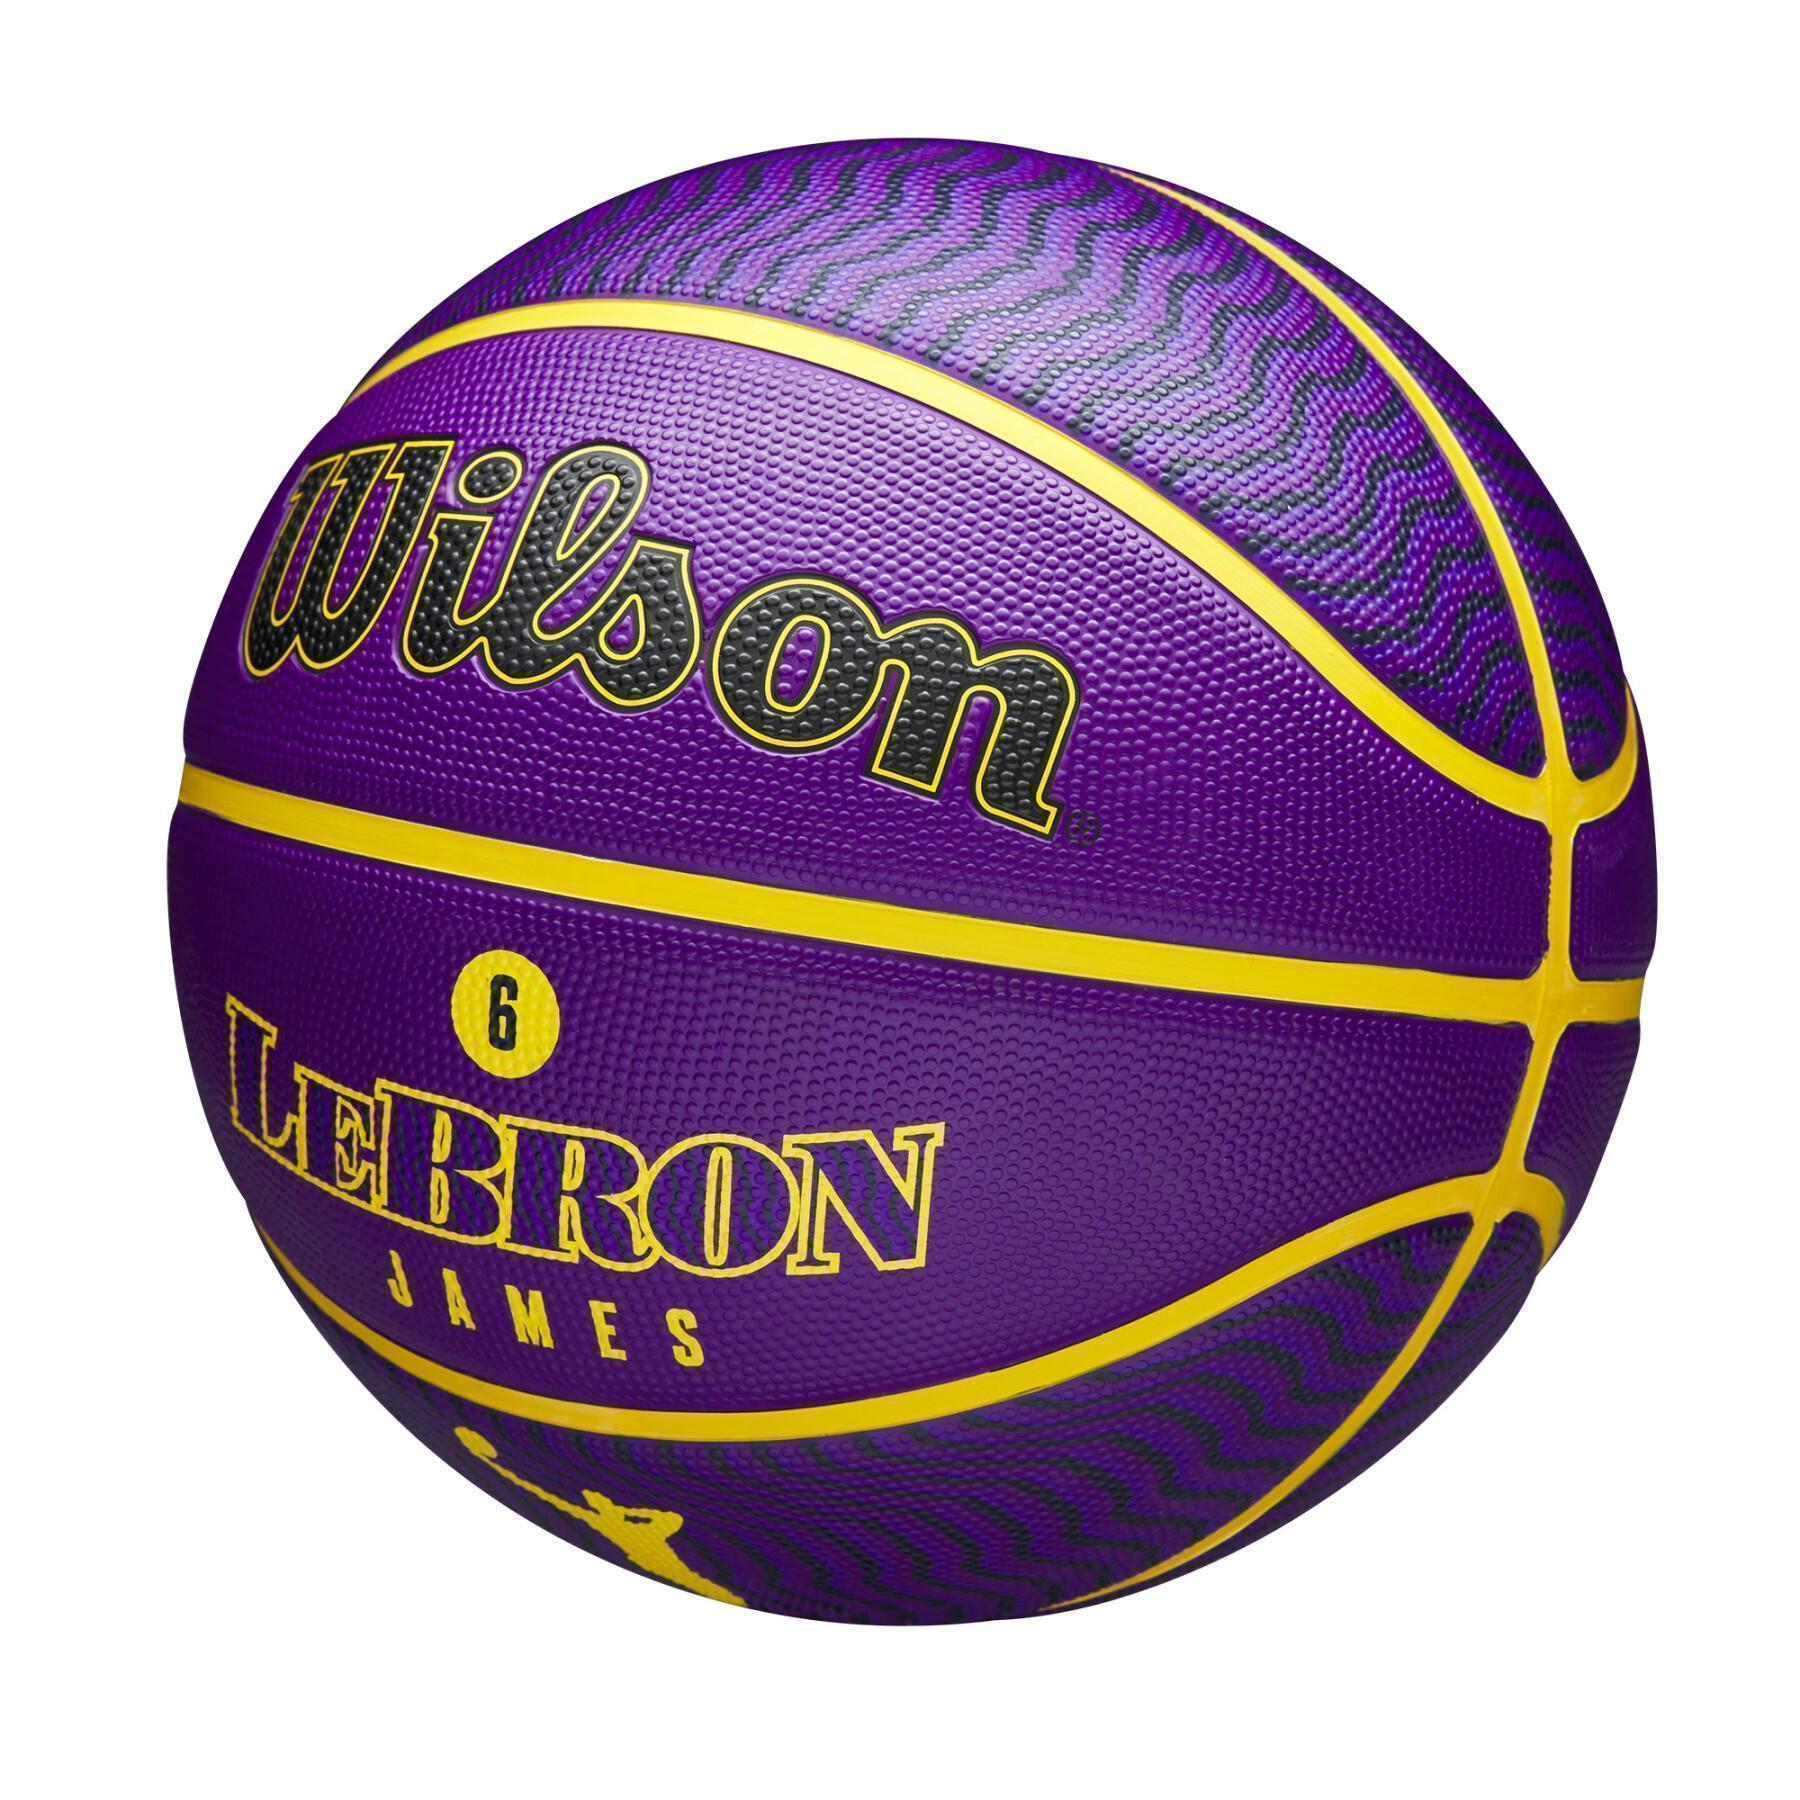 Balon Wilson NBA Icon Lebron James